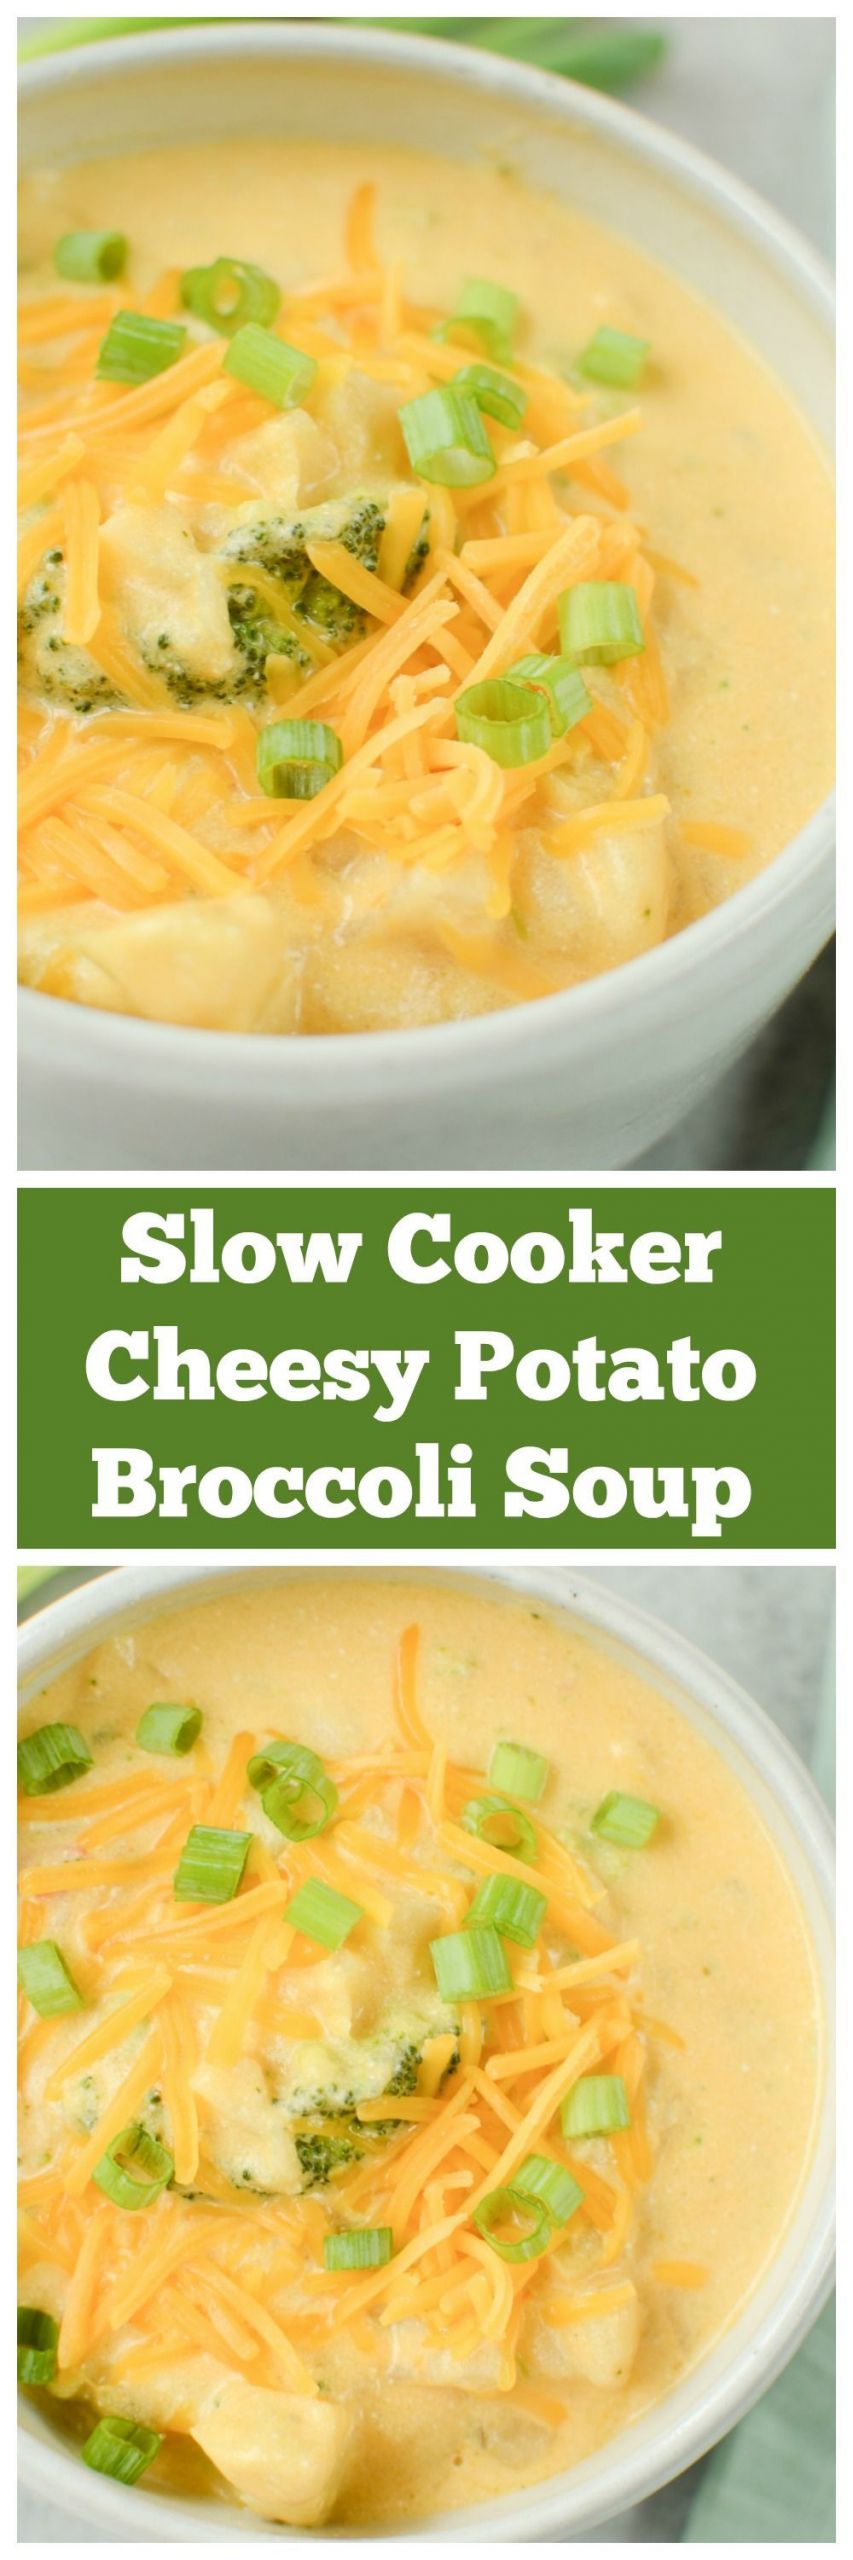 Slow Cooker Potato Broccoli Soup
 Slow Cooker Cheesy Potato Broccoli Soup Quick Weeknight